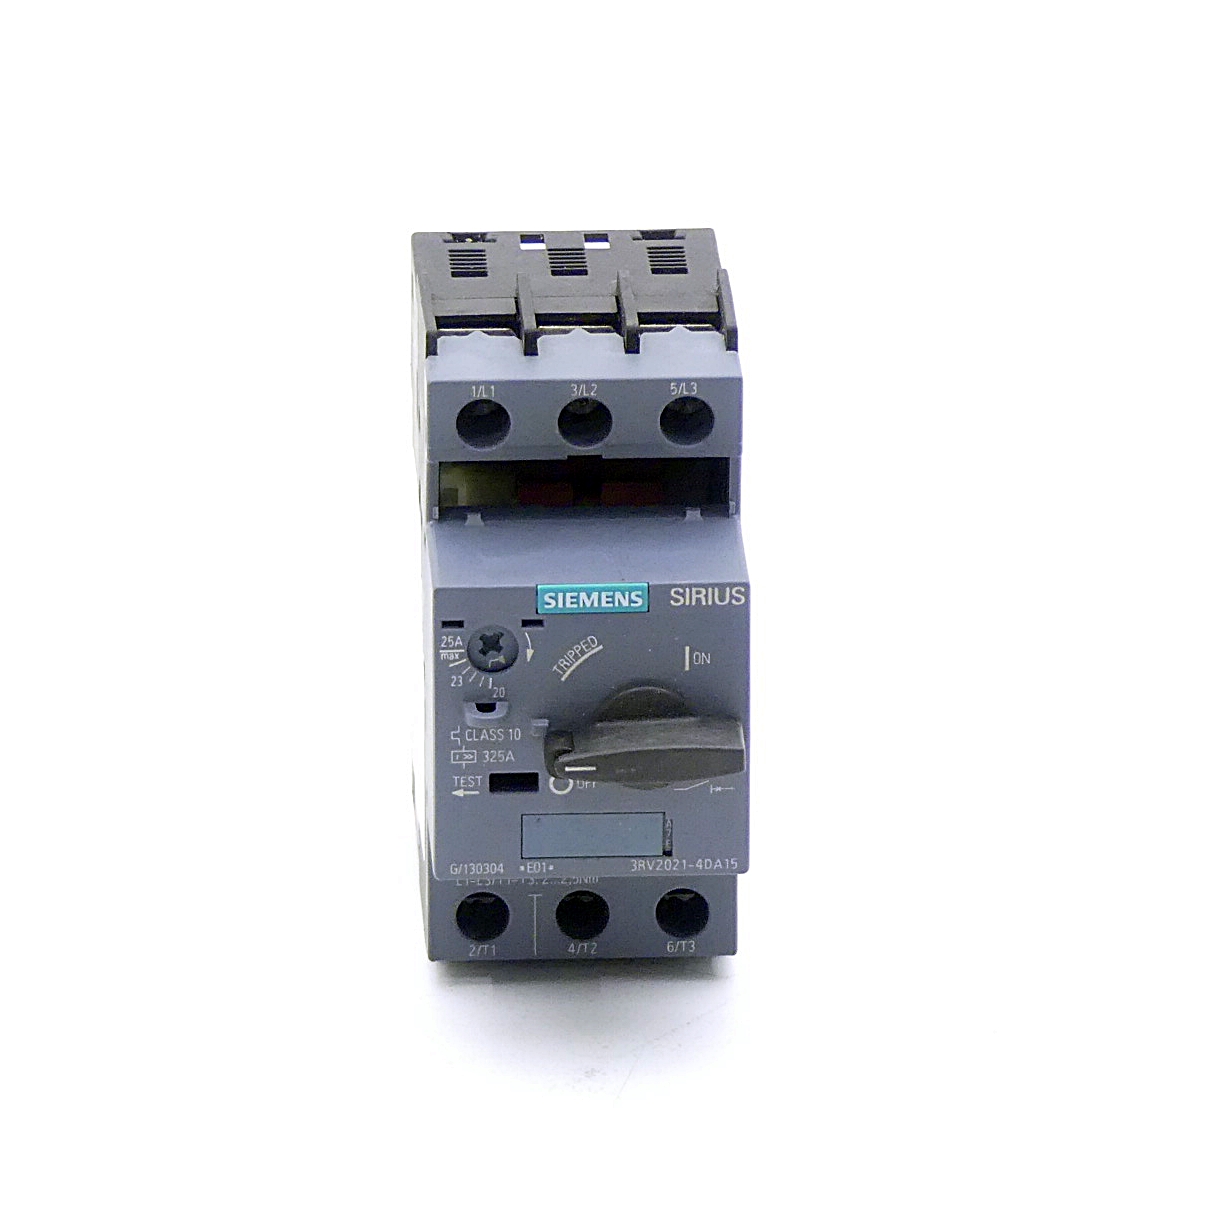 Circuit breaker 3RV2021-4DA15 